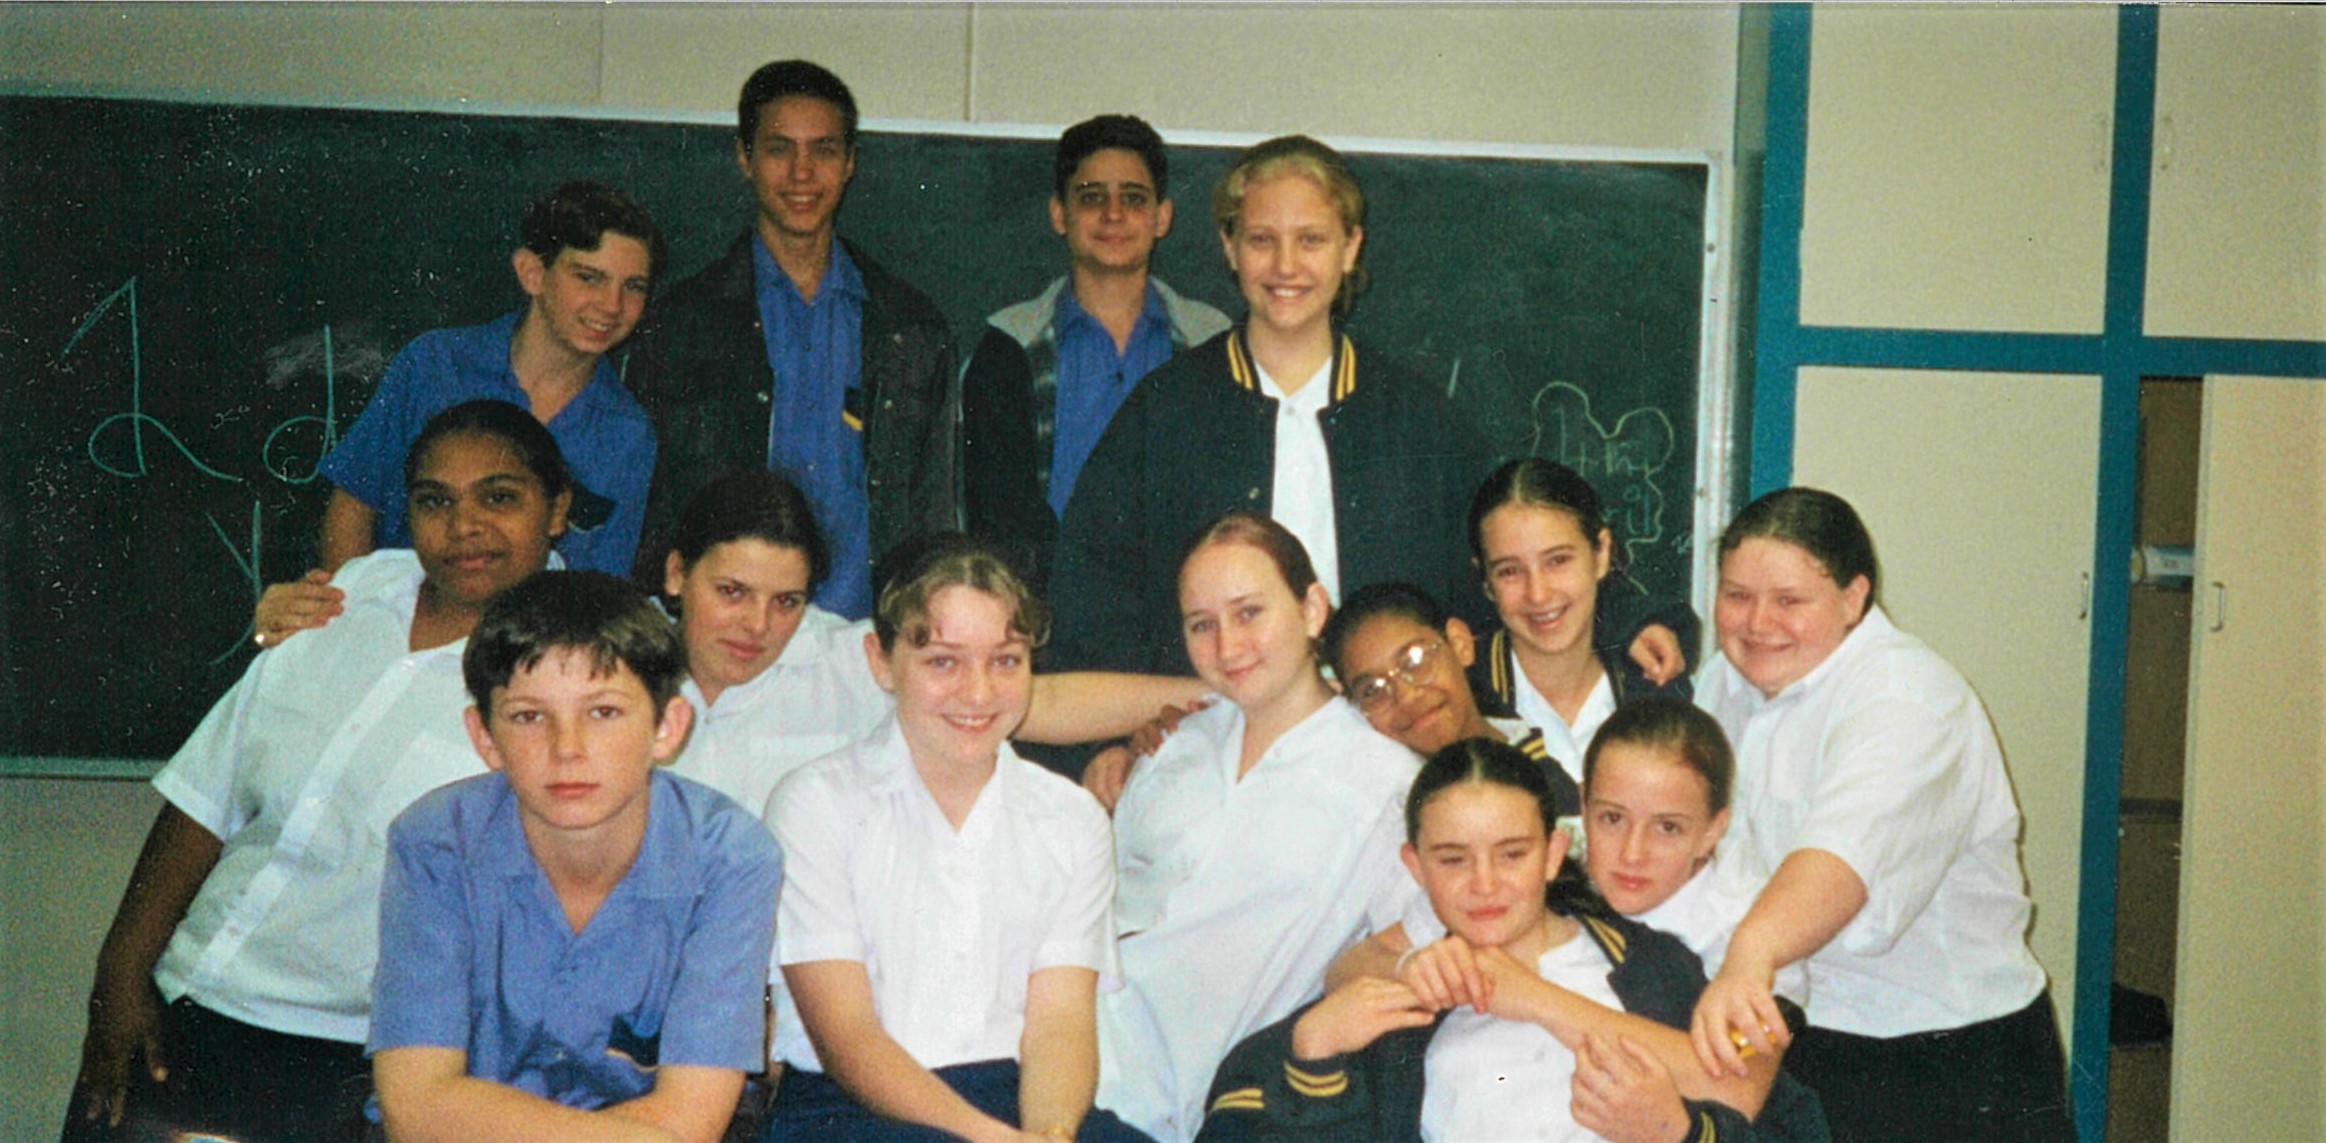 2001 Class group